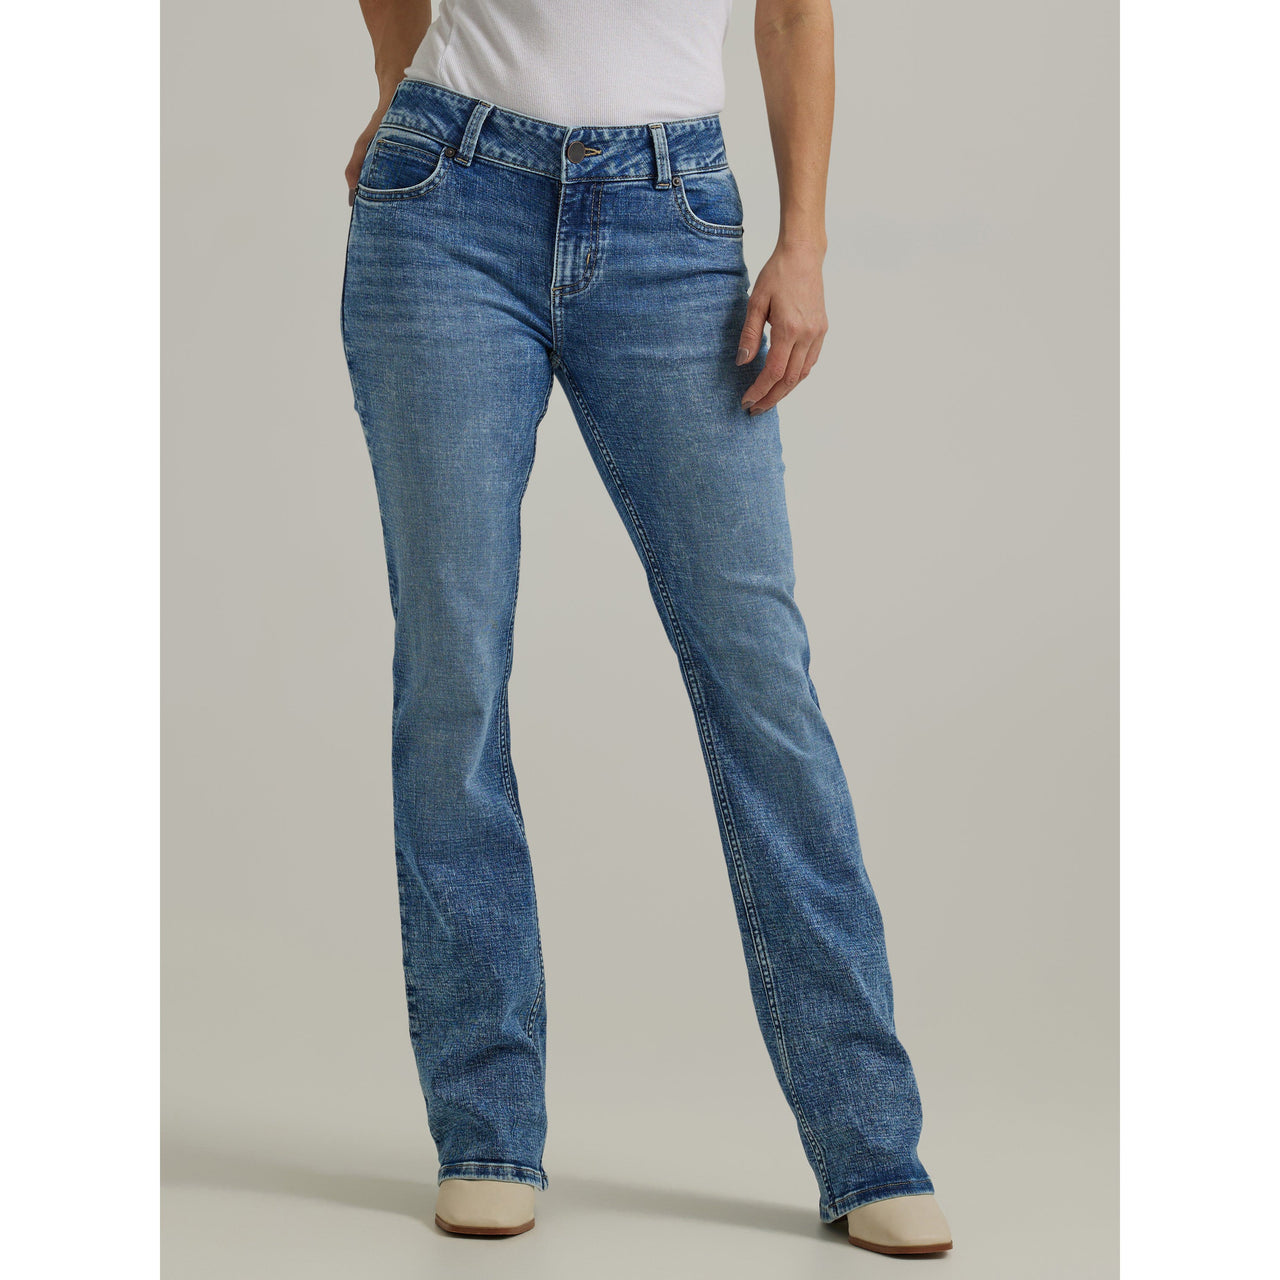 Wrangler Women's Essential Bootcut Jeans - Jayne